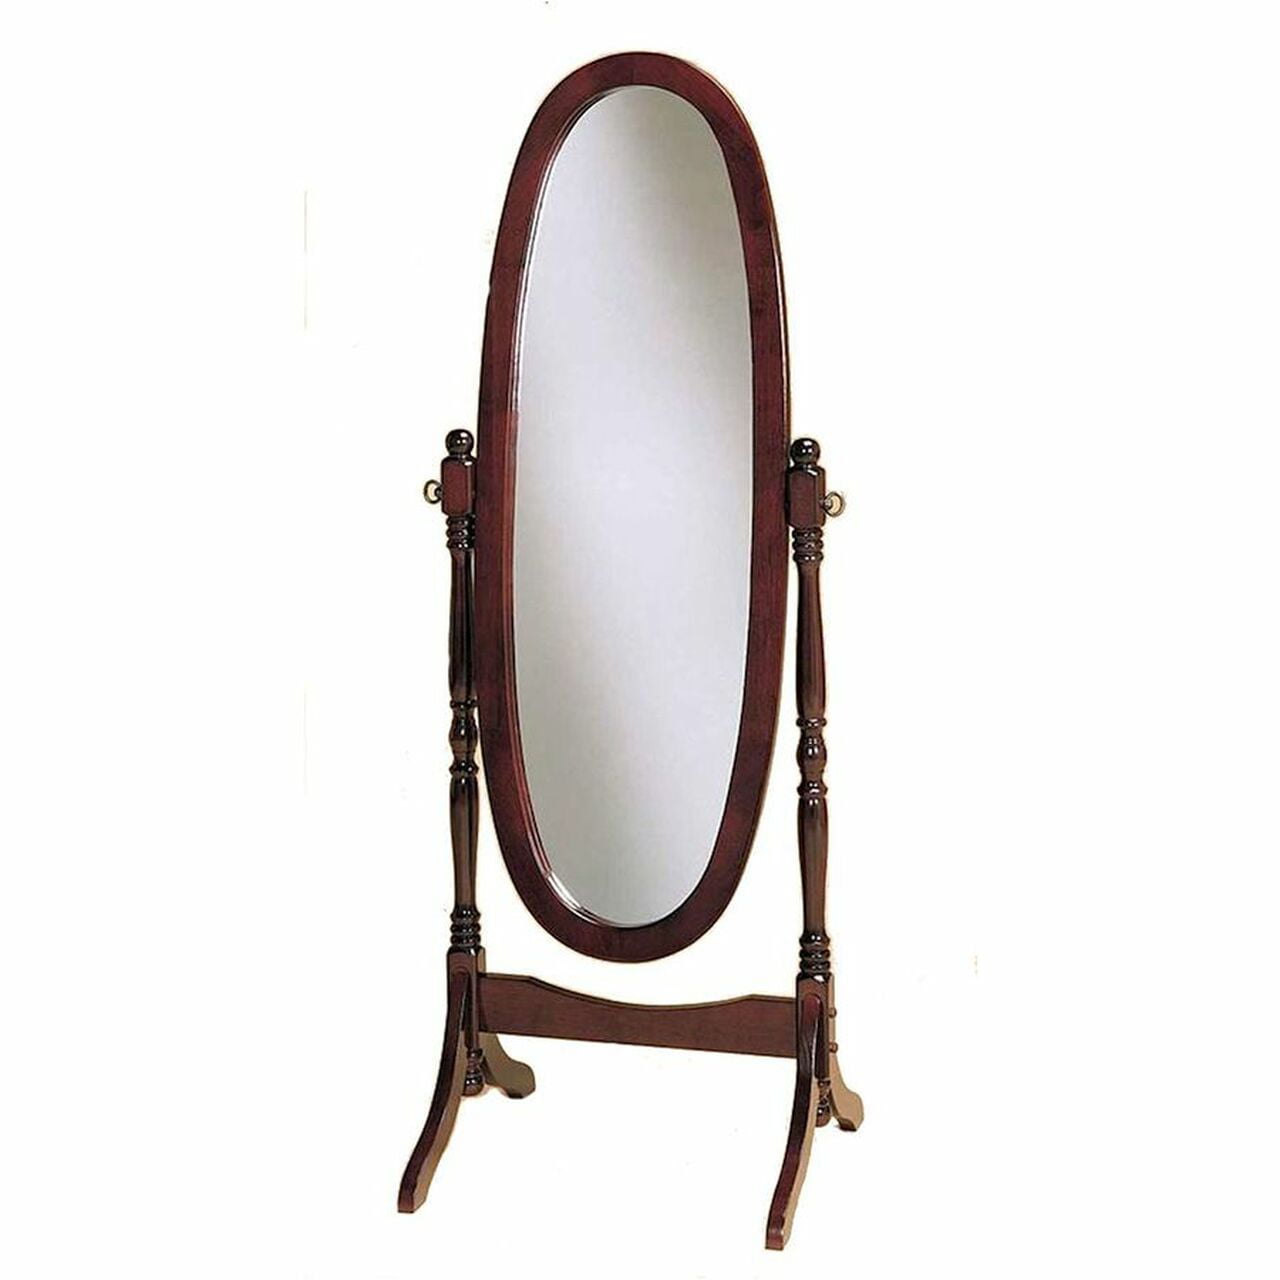 Legacy Decor Wood Rectangular Cheval Floor Mirror Free Standing Mirror